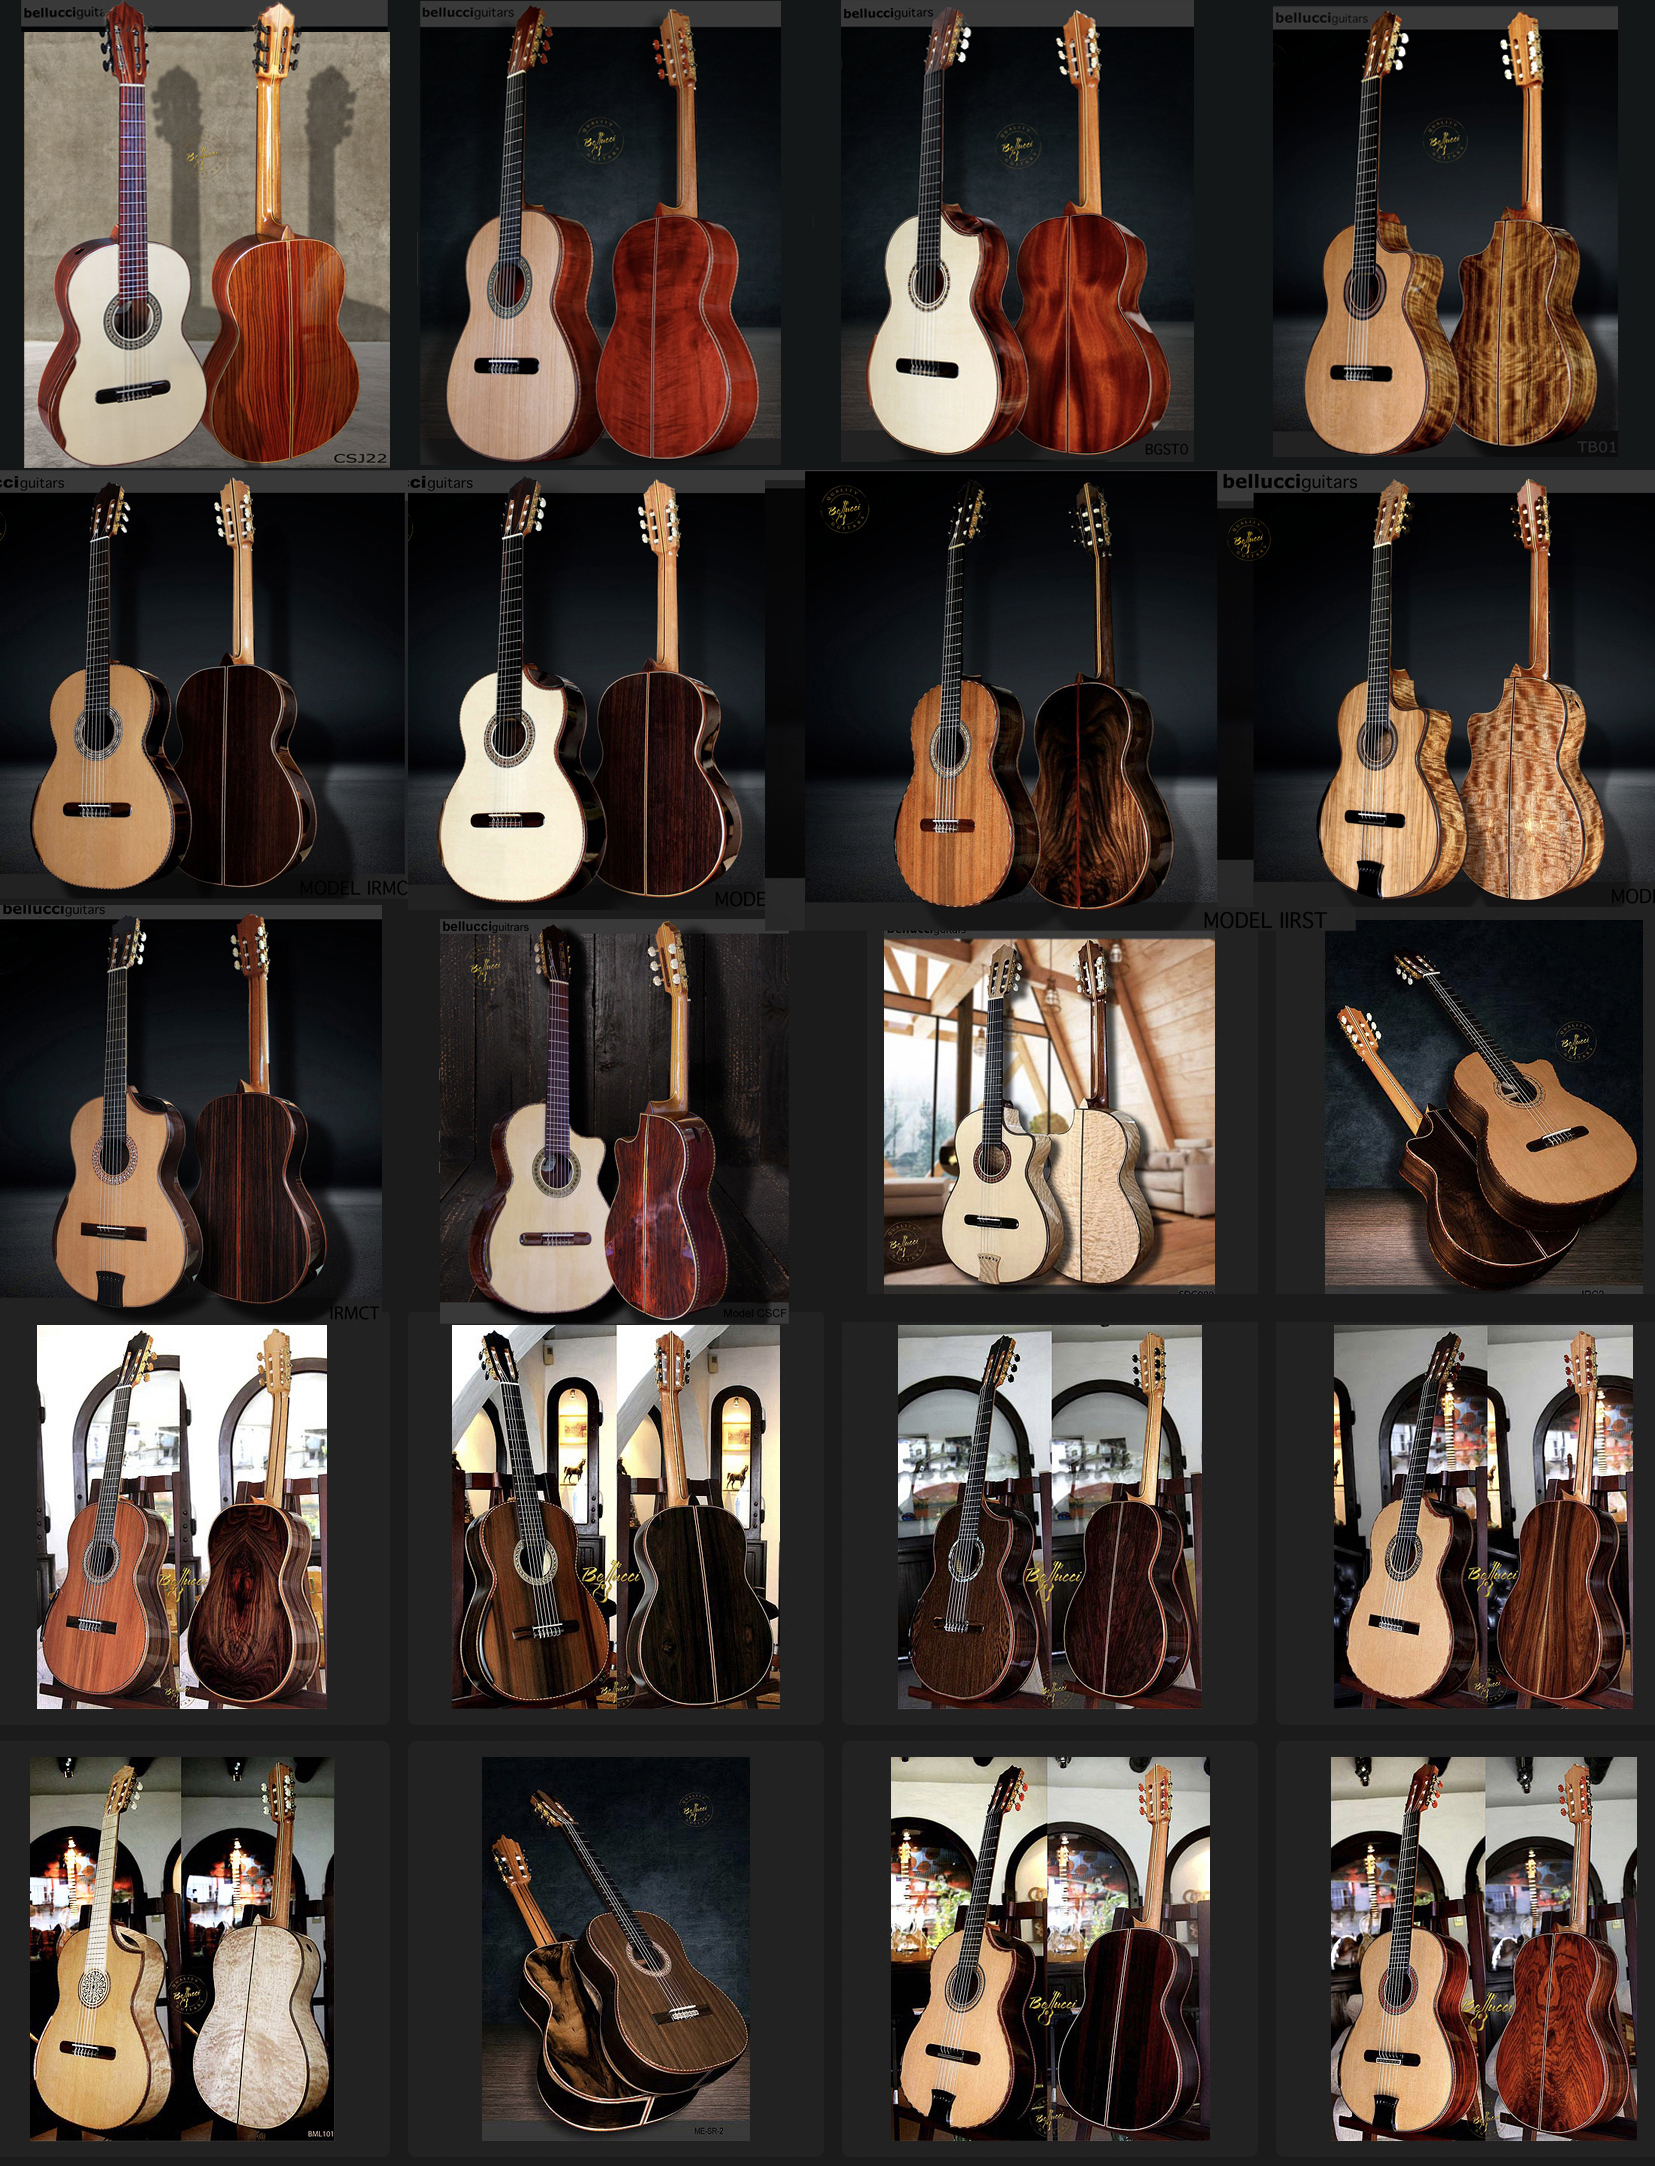 Amazing Bellucci Guitars Page 4